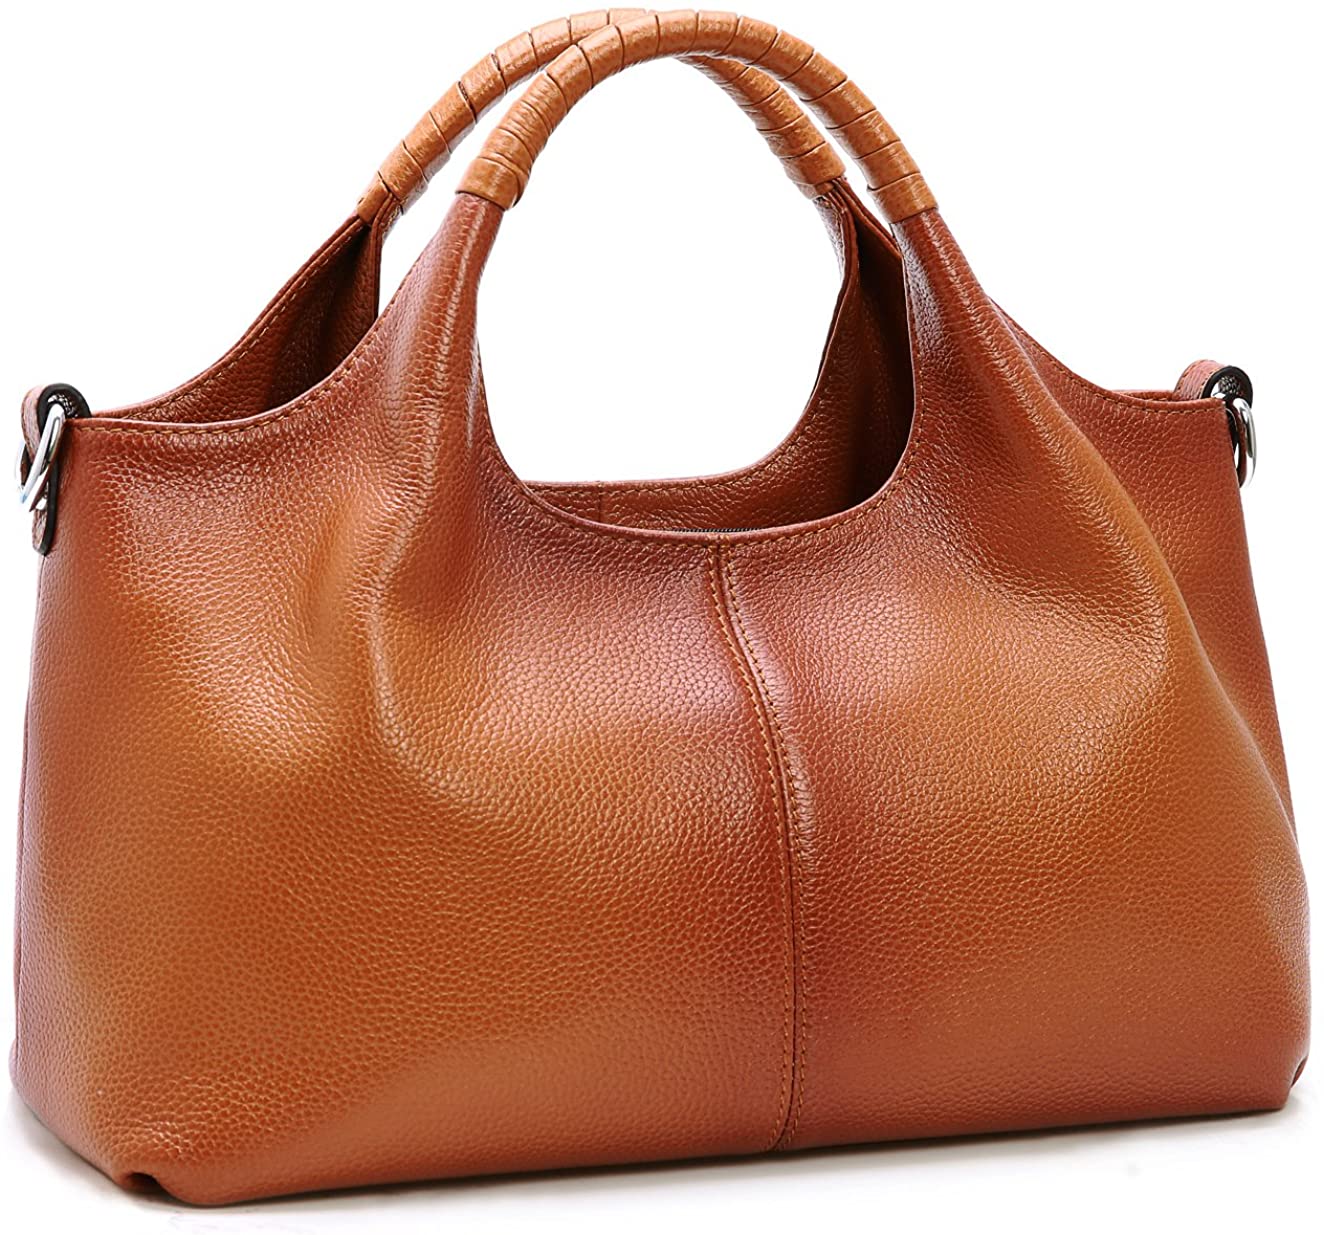 Handbags, Women's Handbags